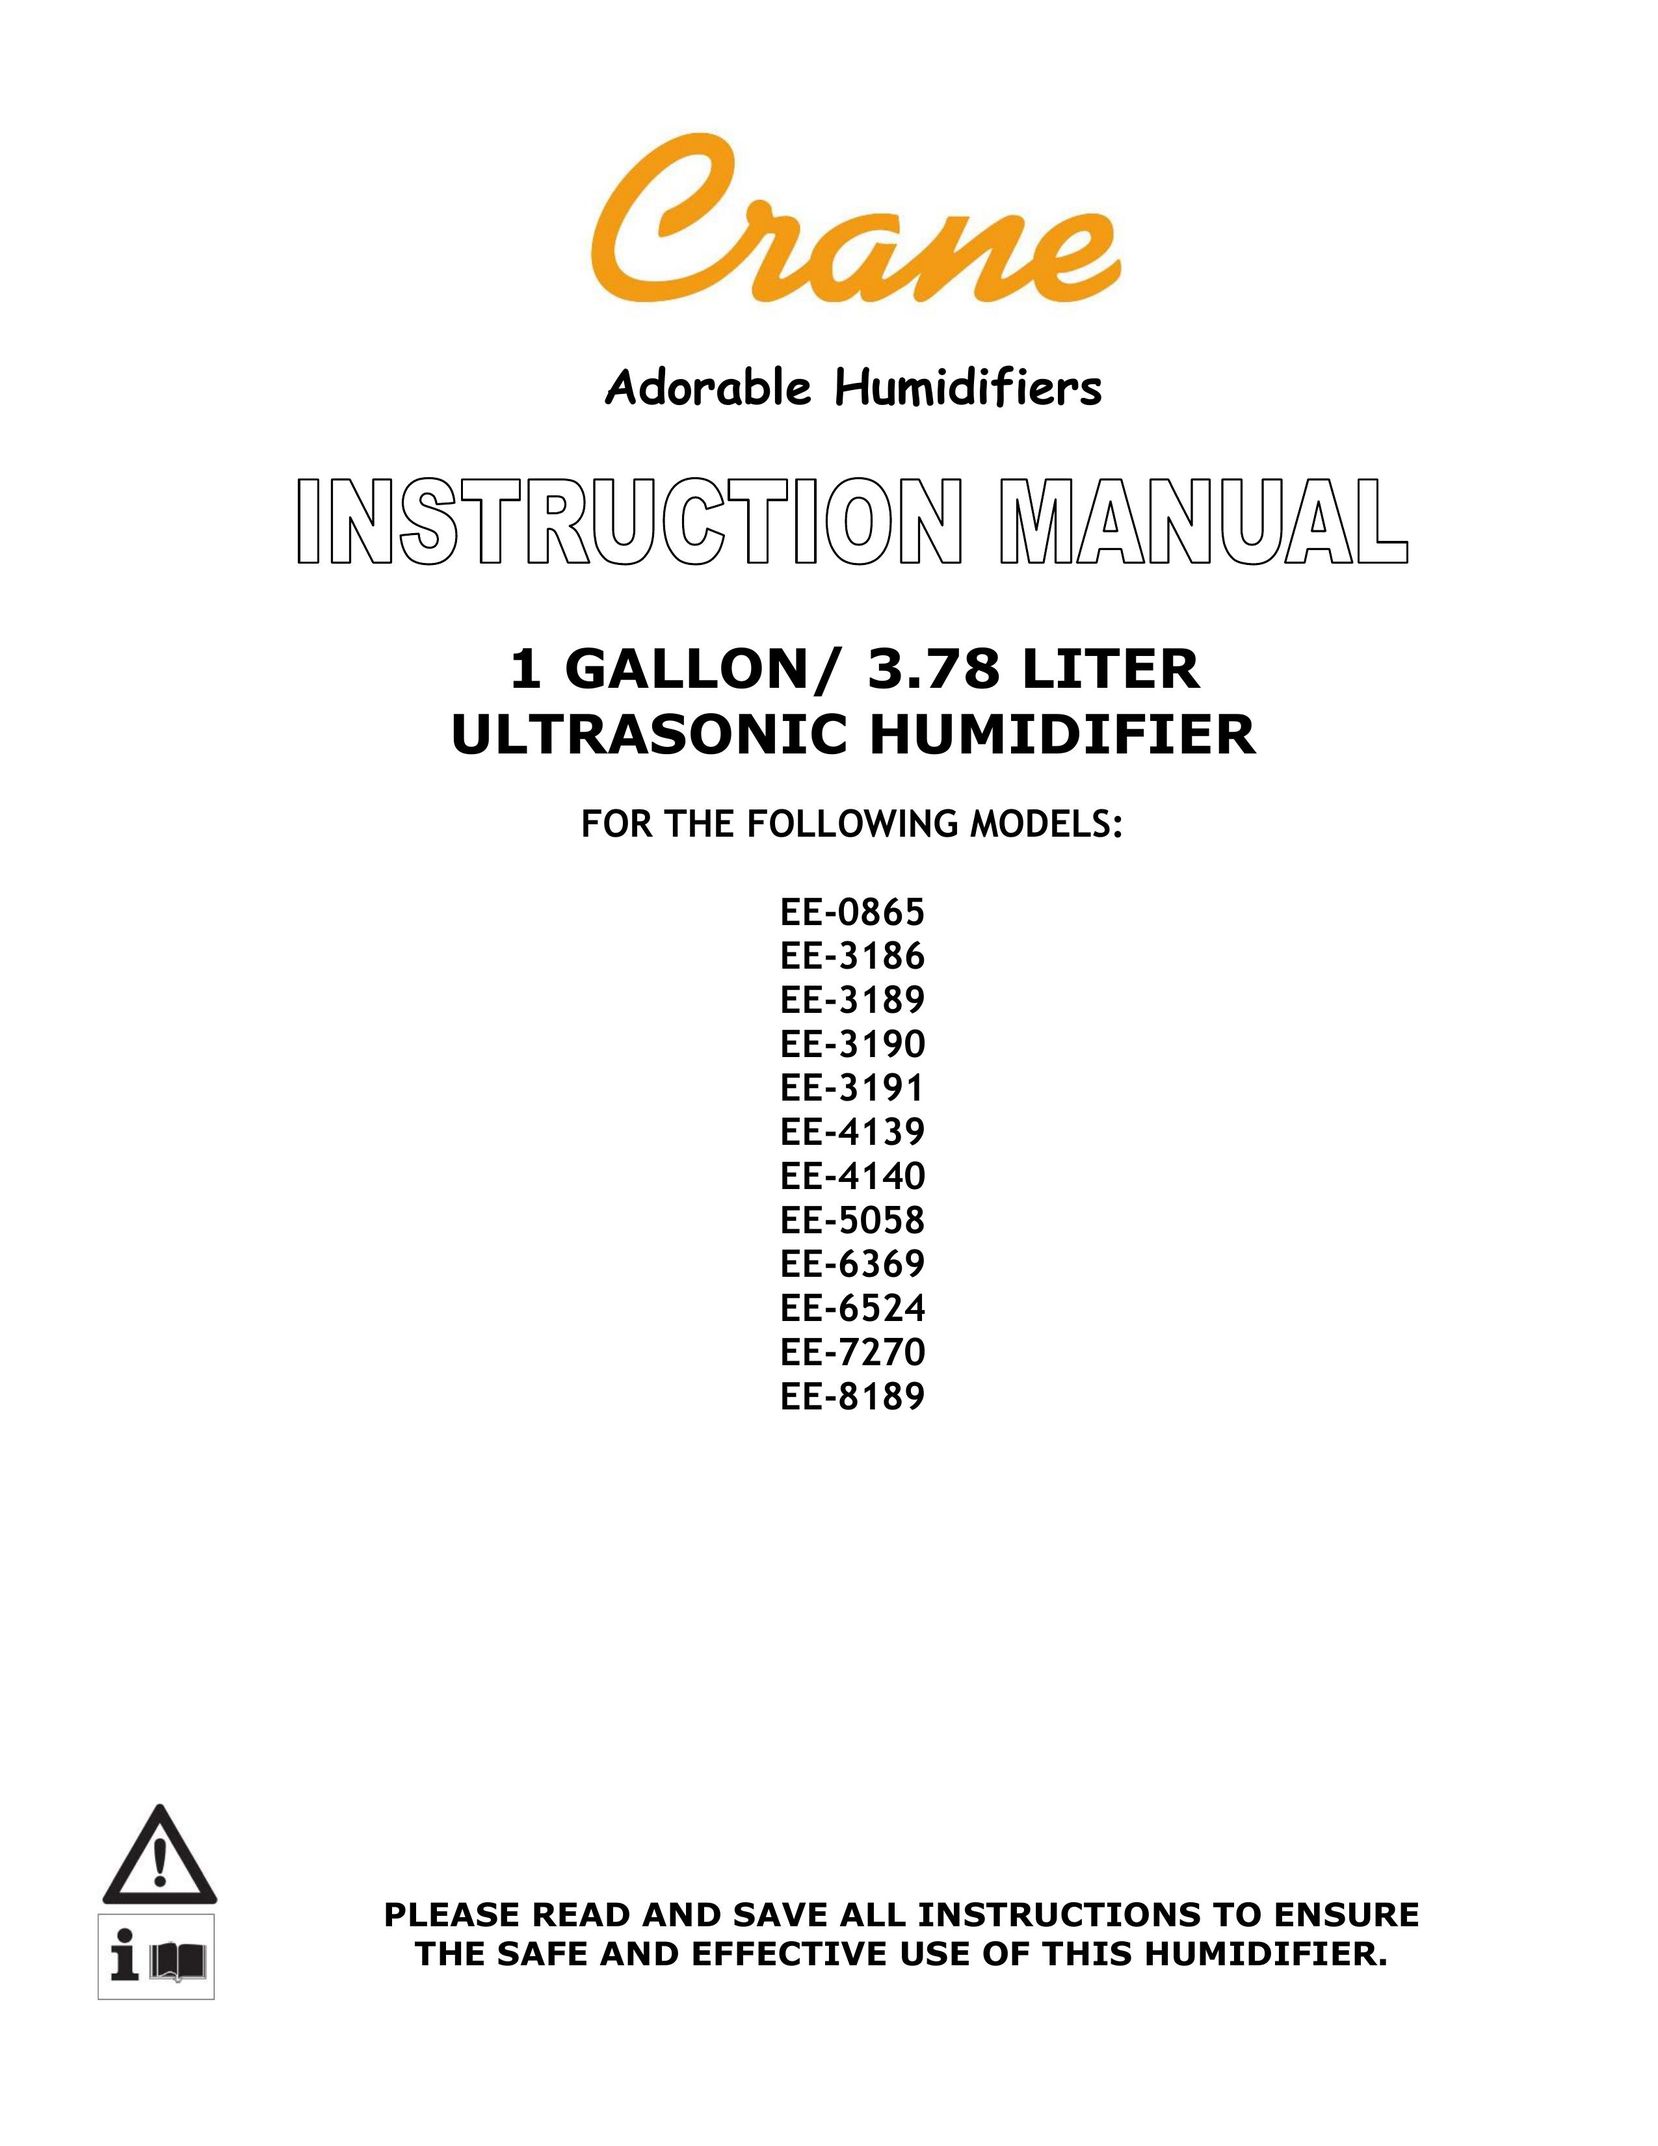 Crane EE-3191 Humidifier User Manual